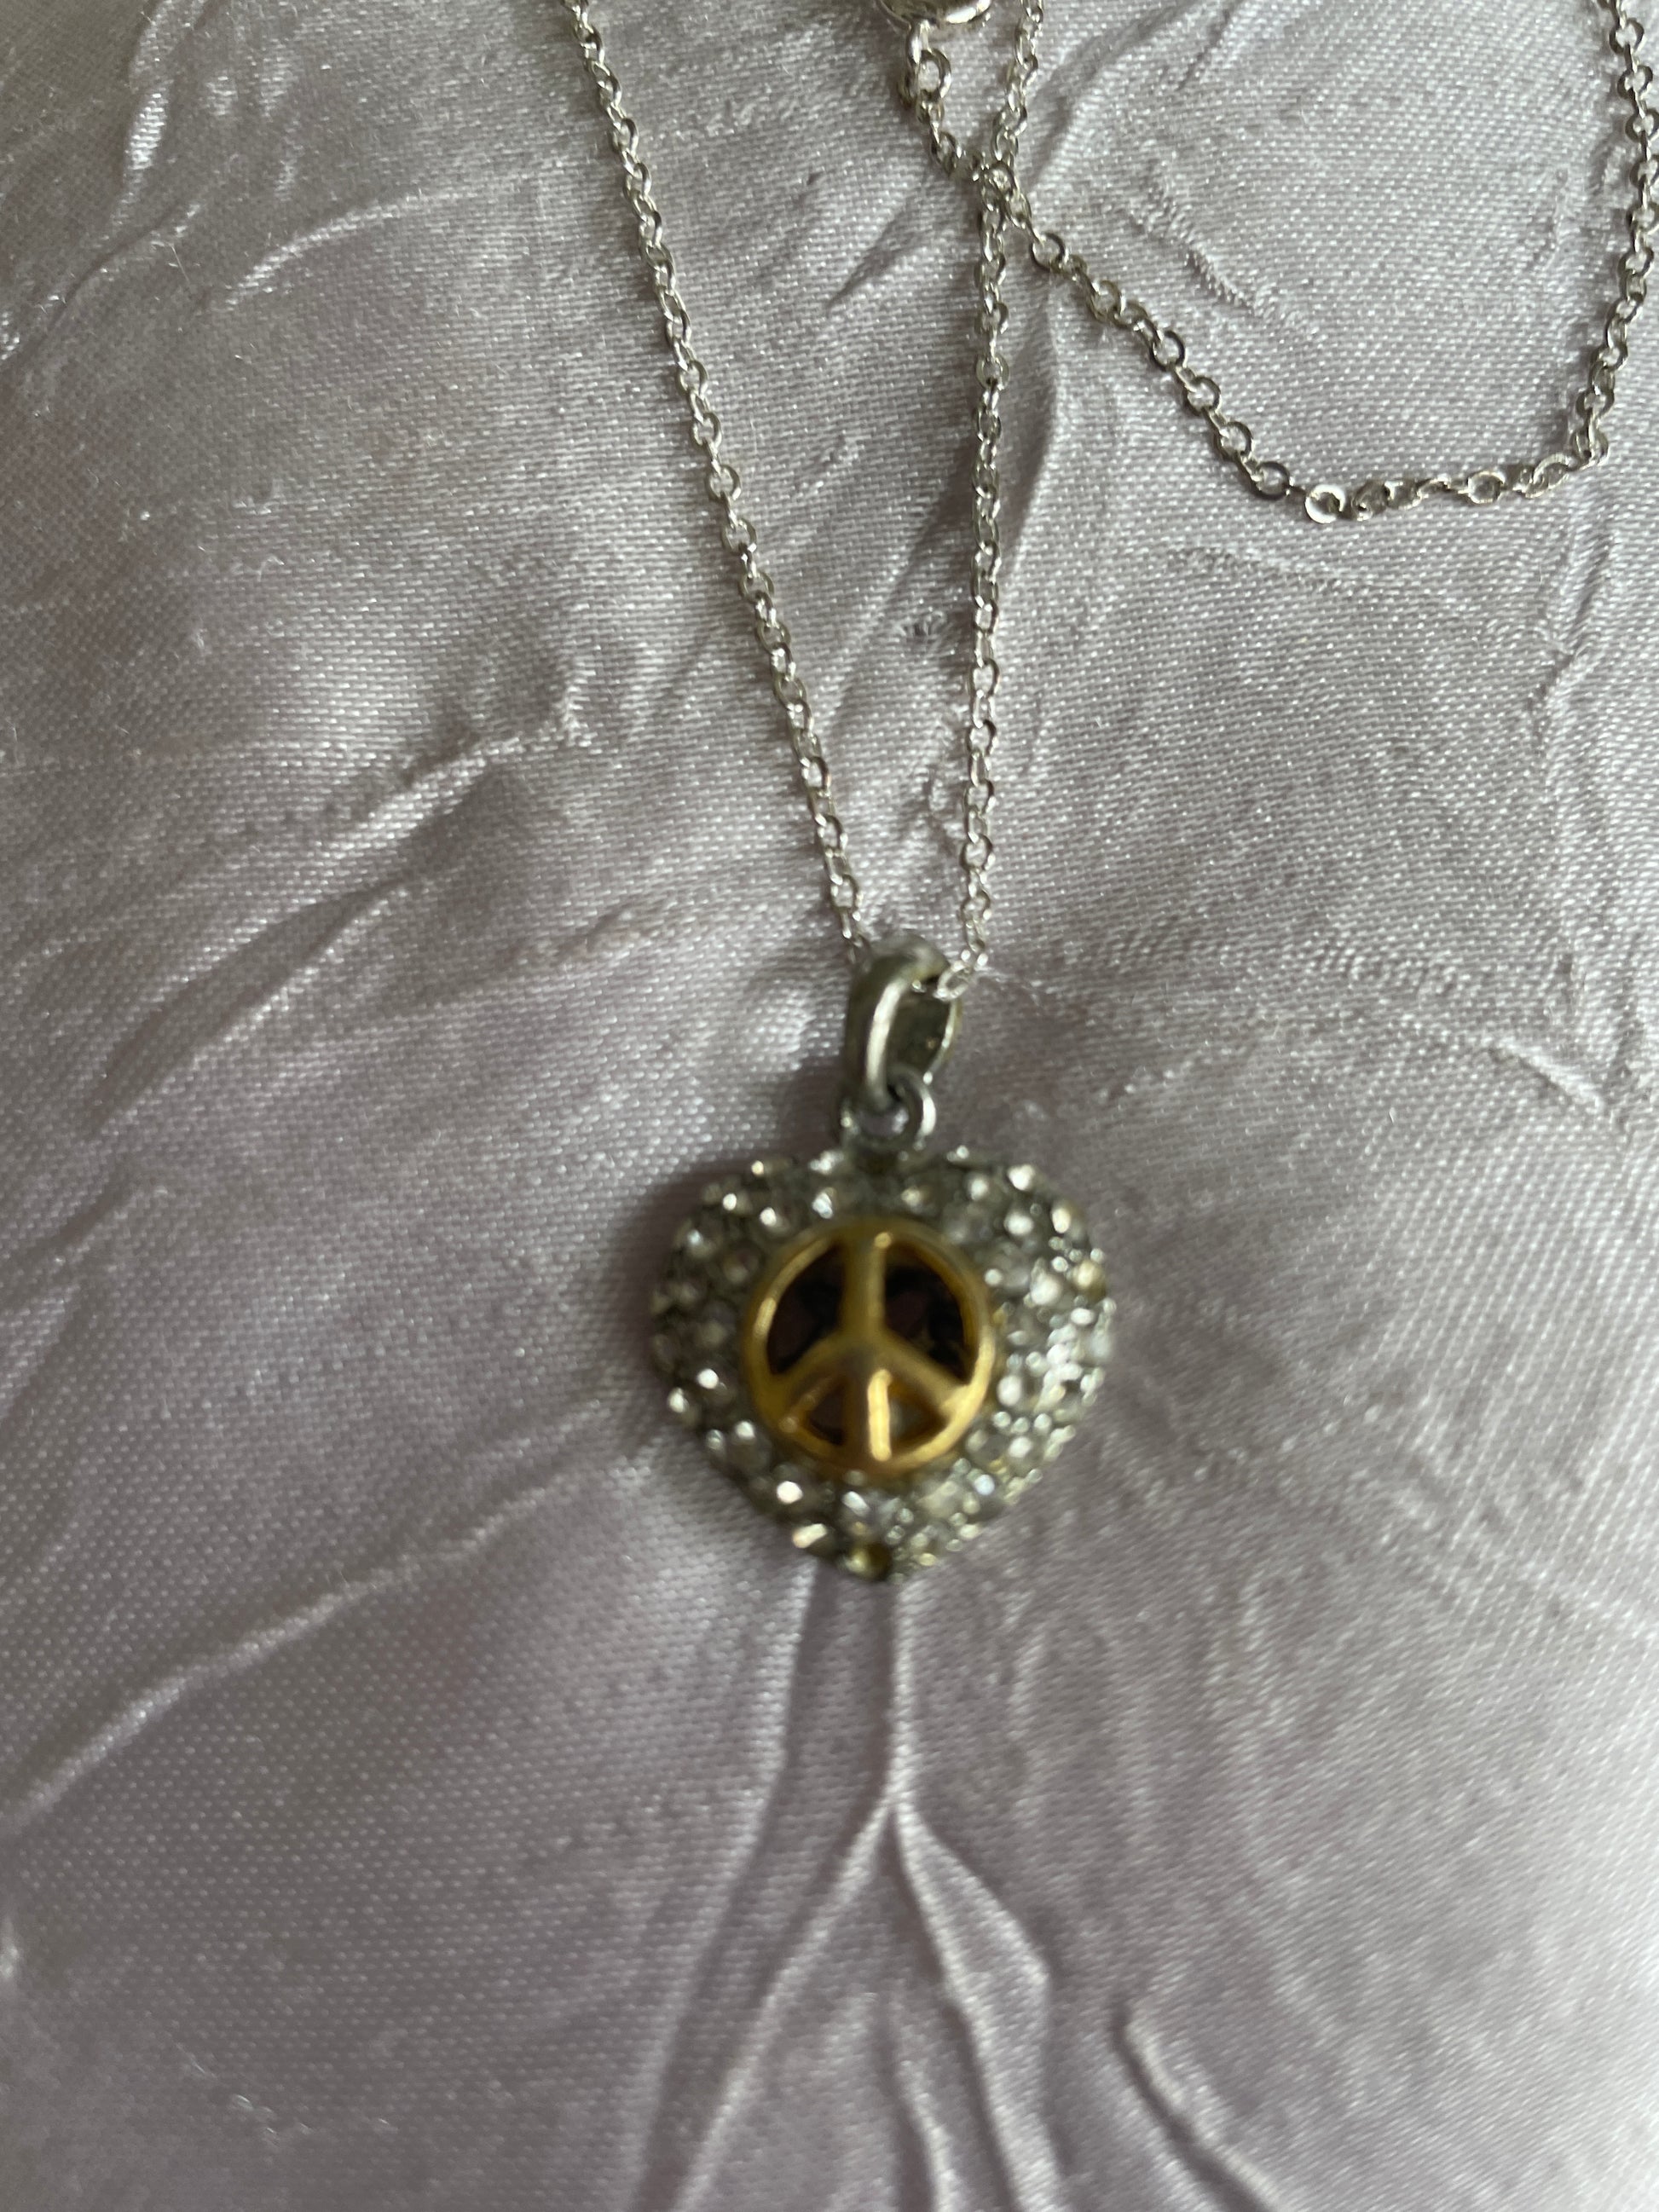  Delicate Silver Chain 2000s Heart Peace Sign Pendant Necklace